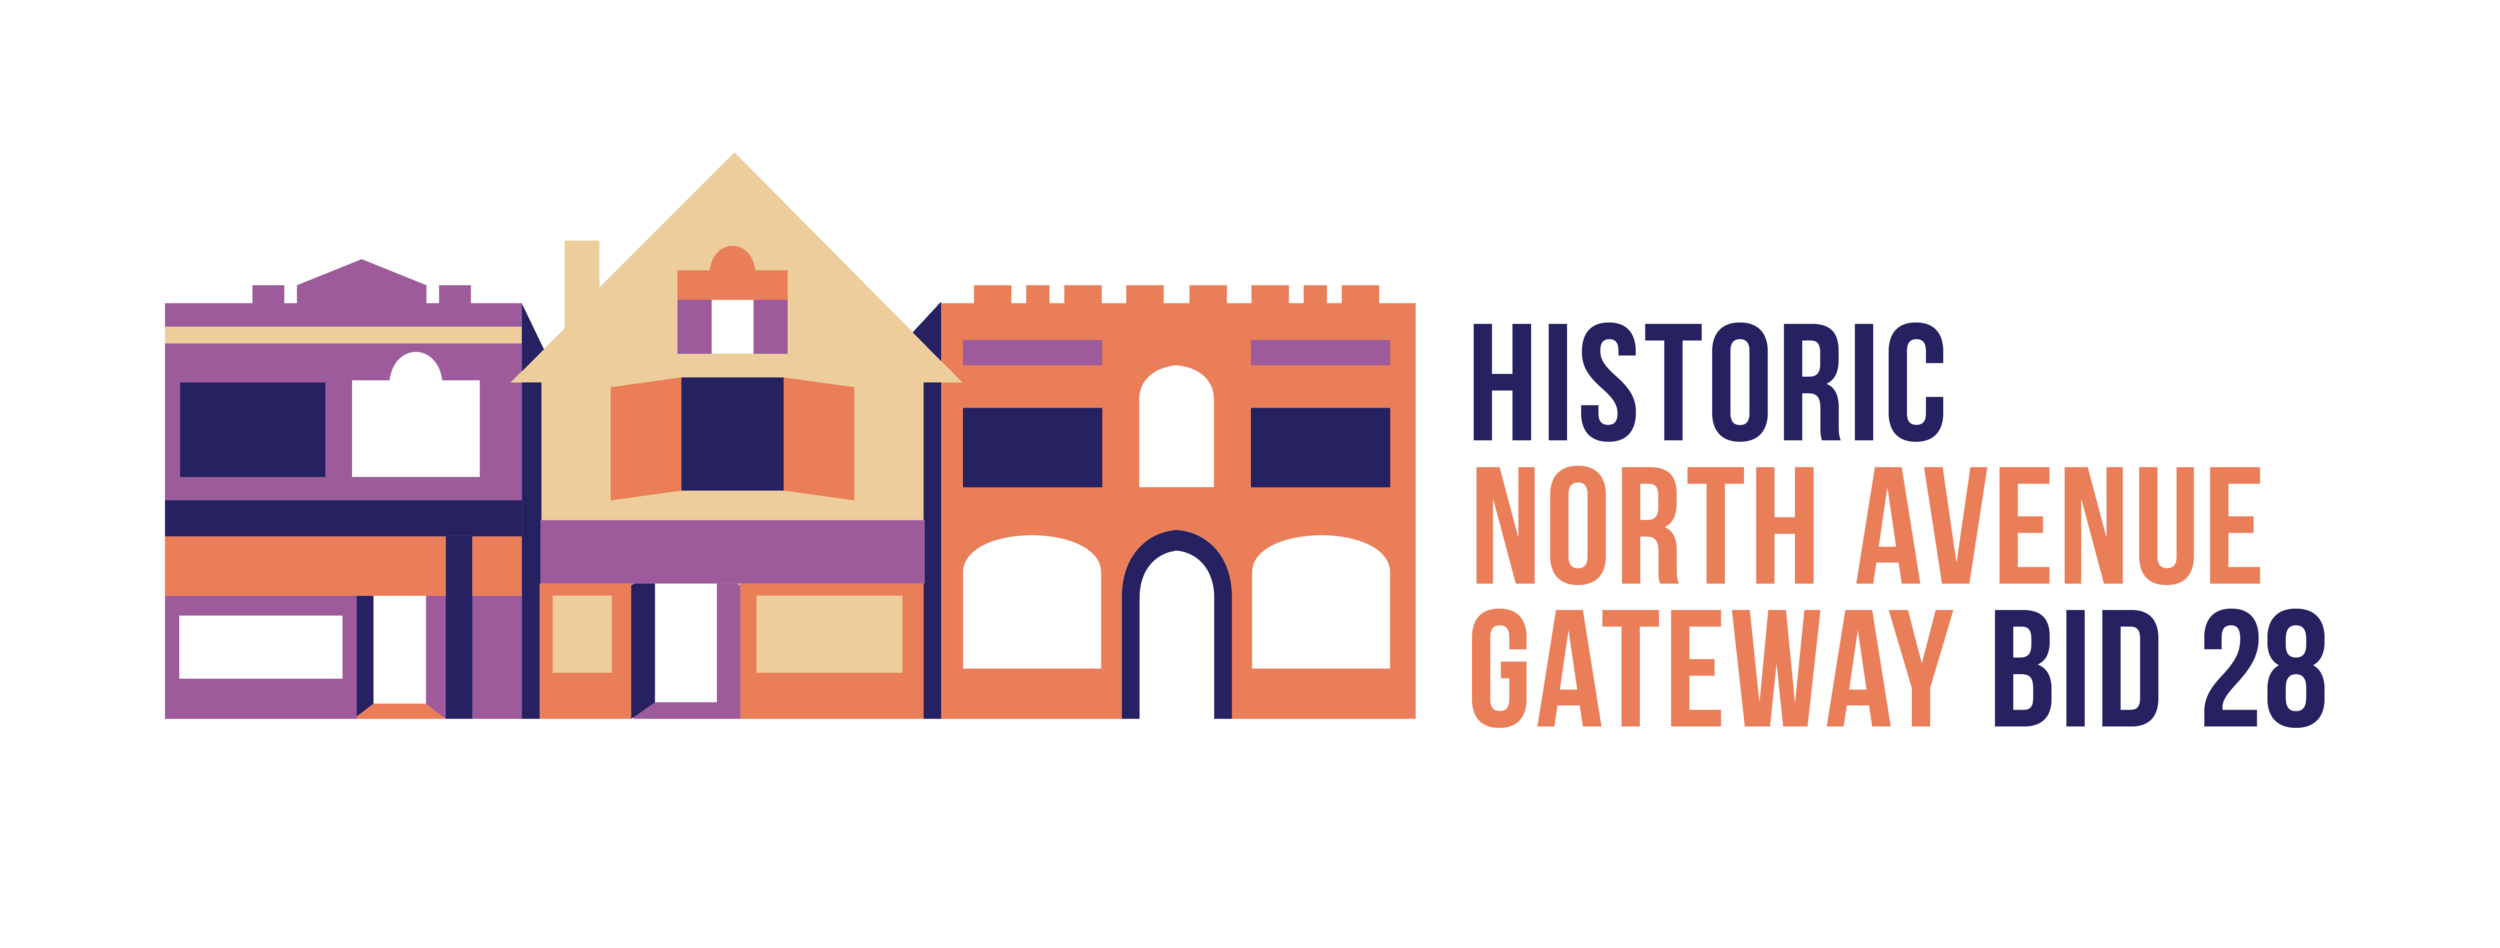 Historic North Avenue Gateway Bid 28